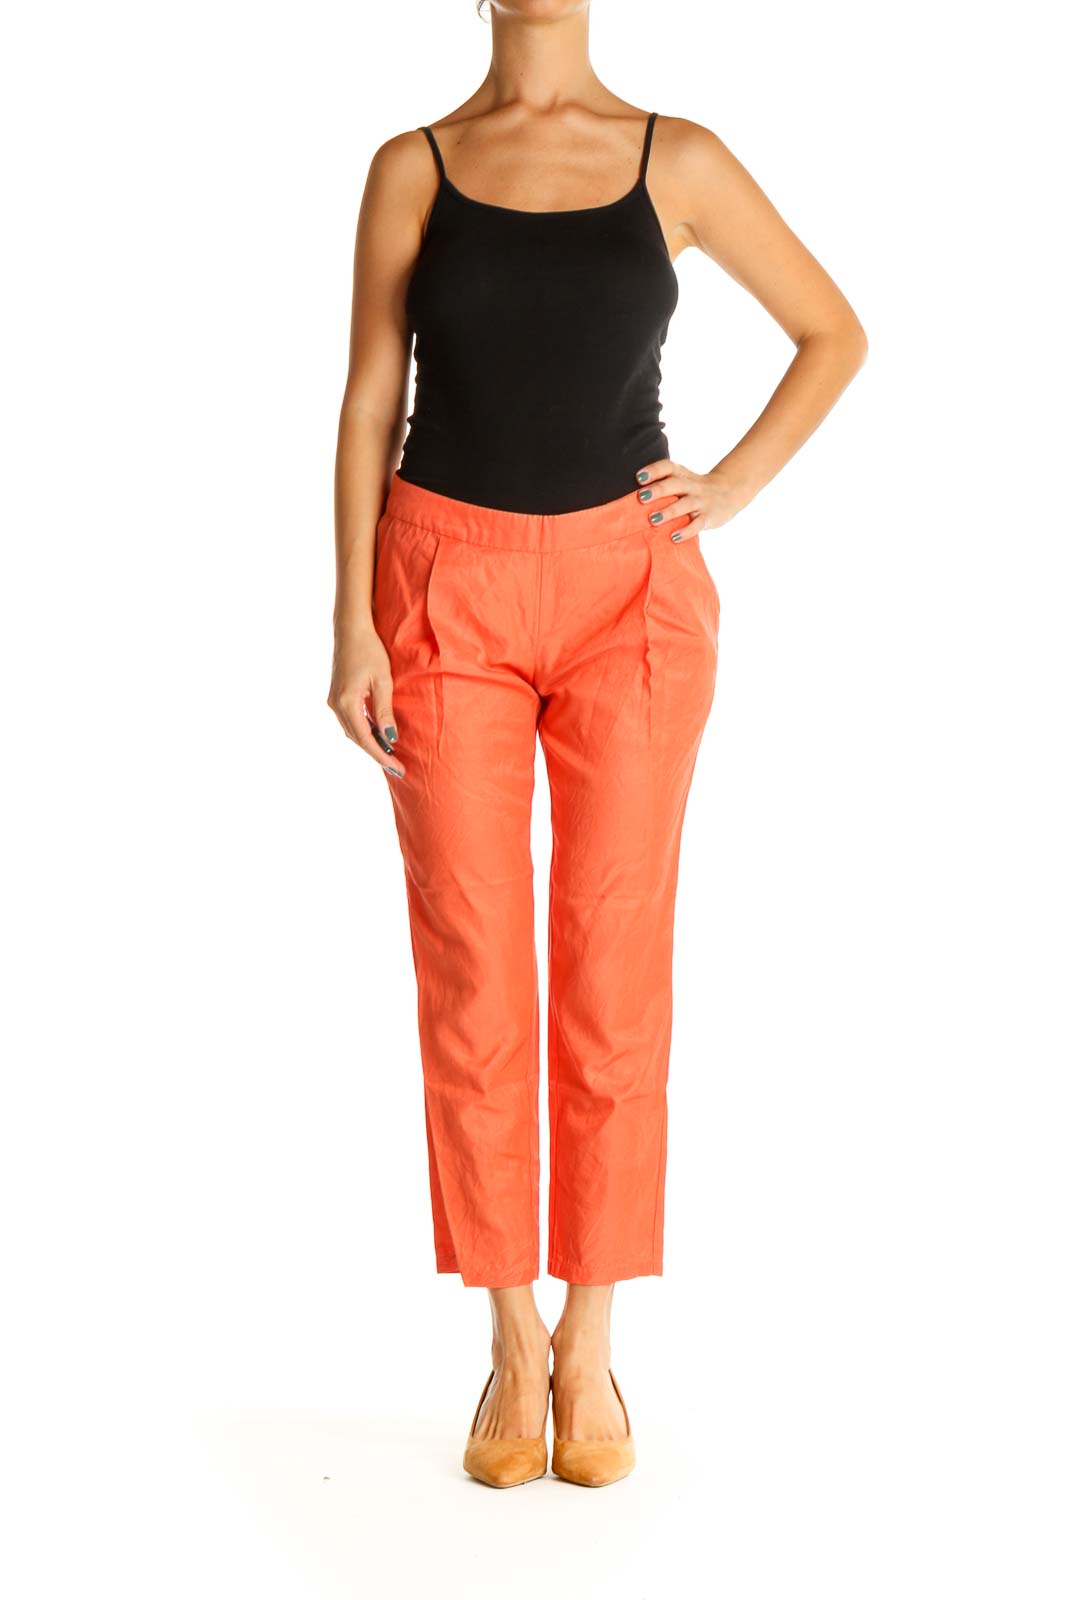 Kate Spade SATURDAY - Orange Solid Casual Capri Pants Cotton Cupro